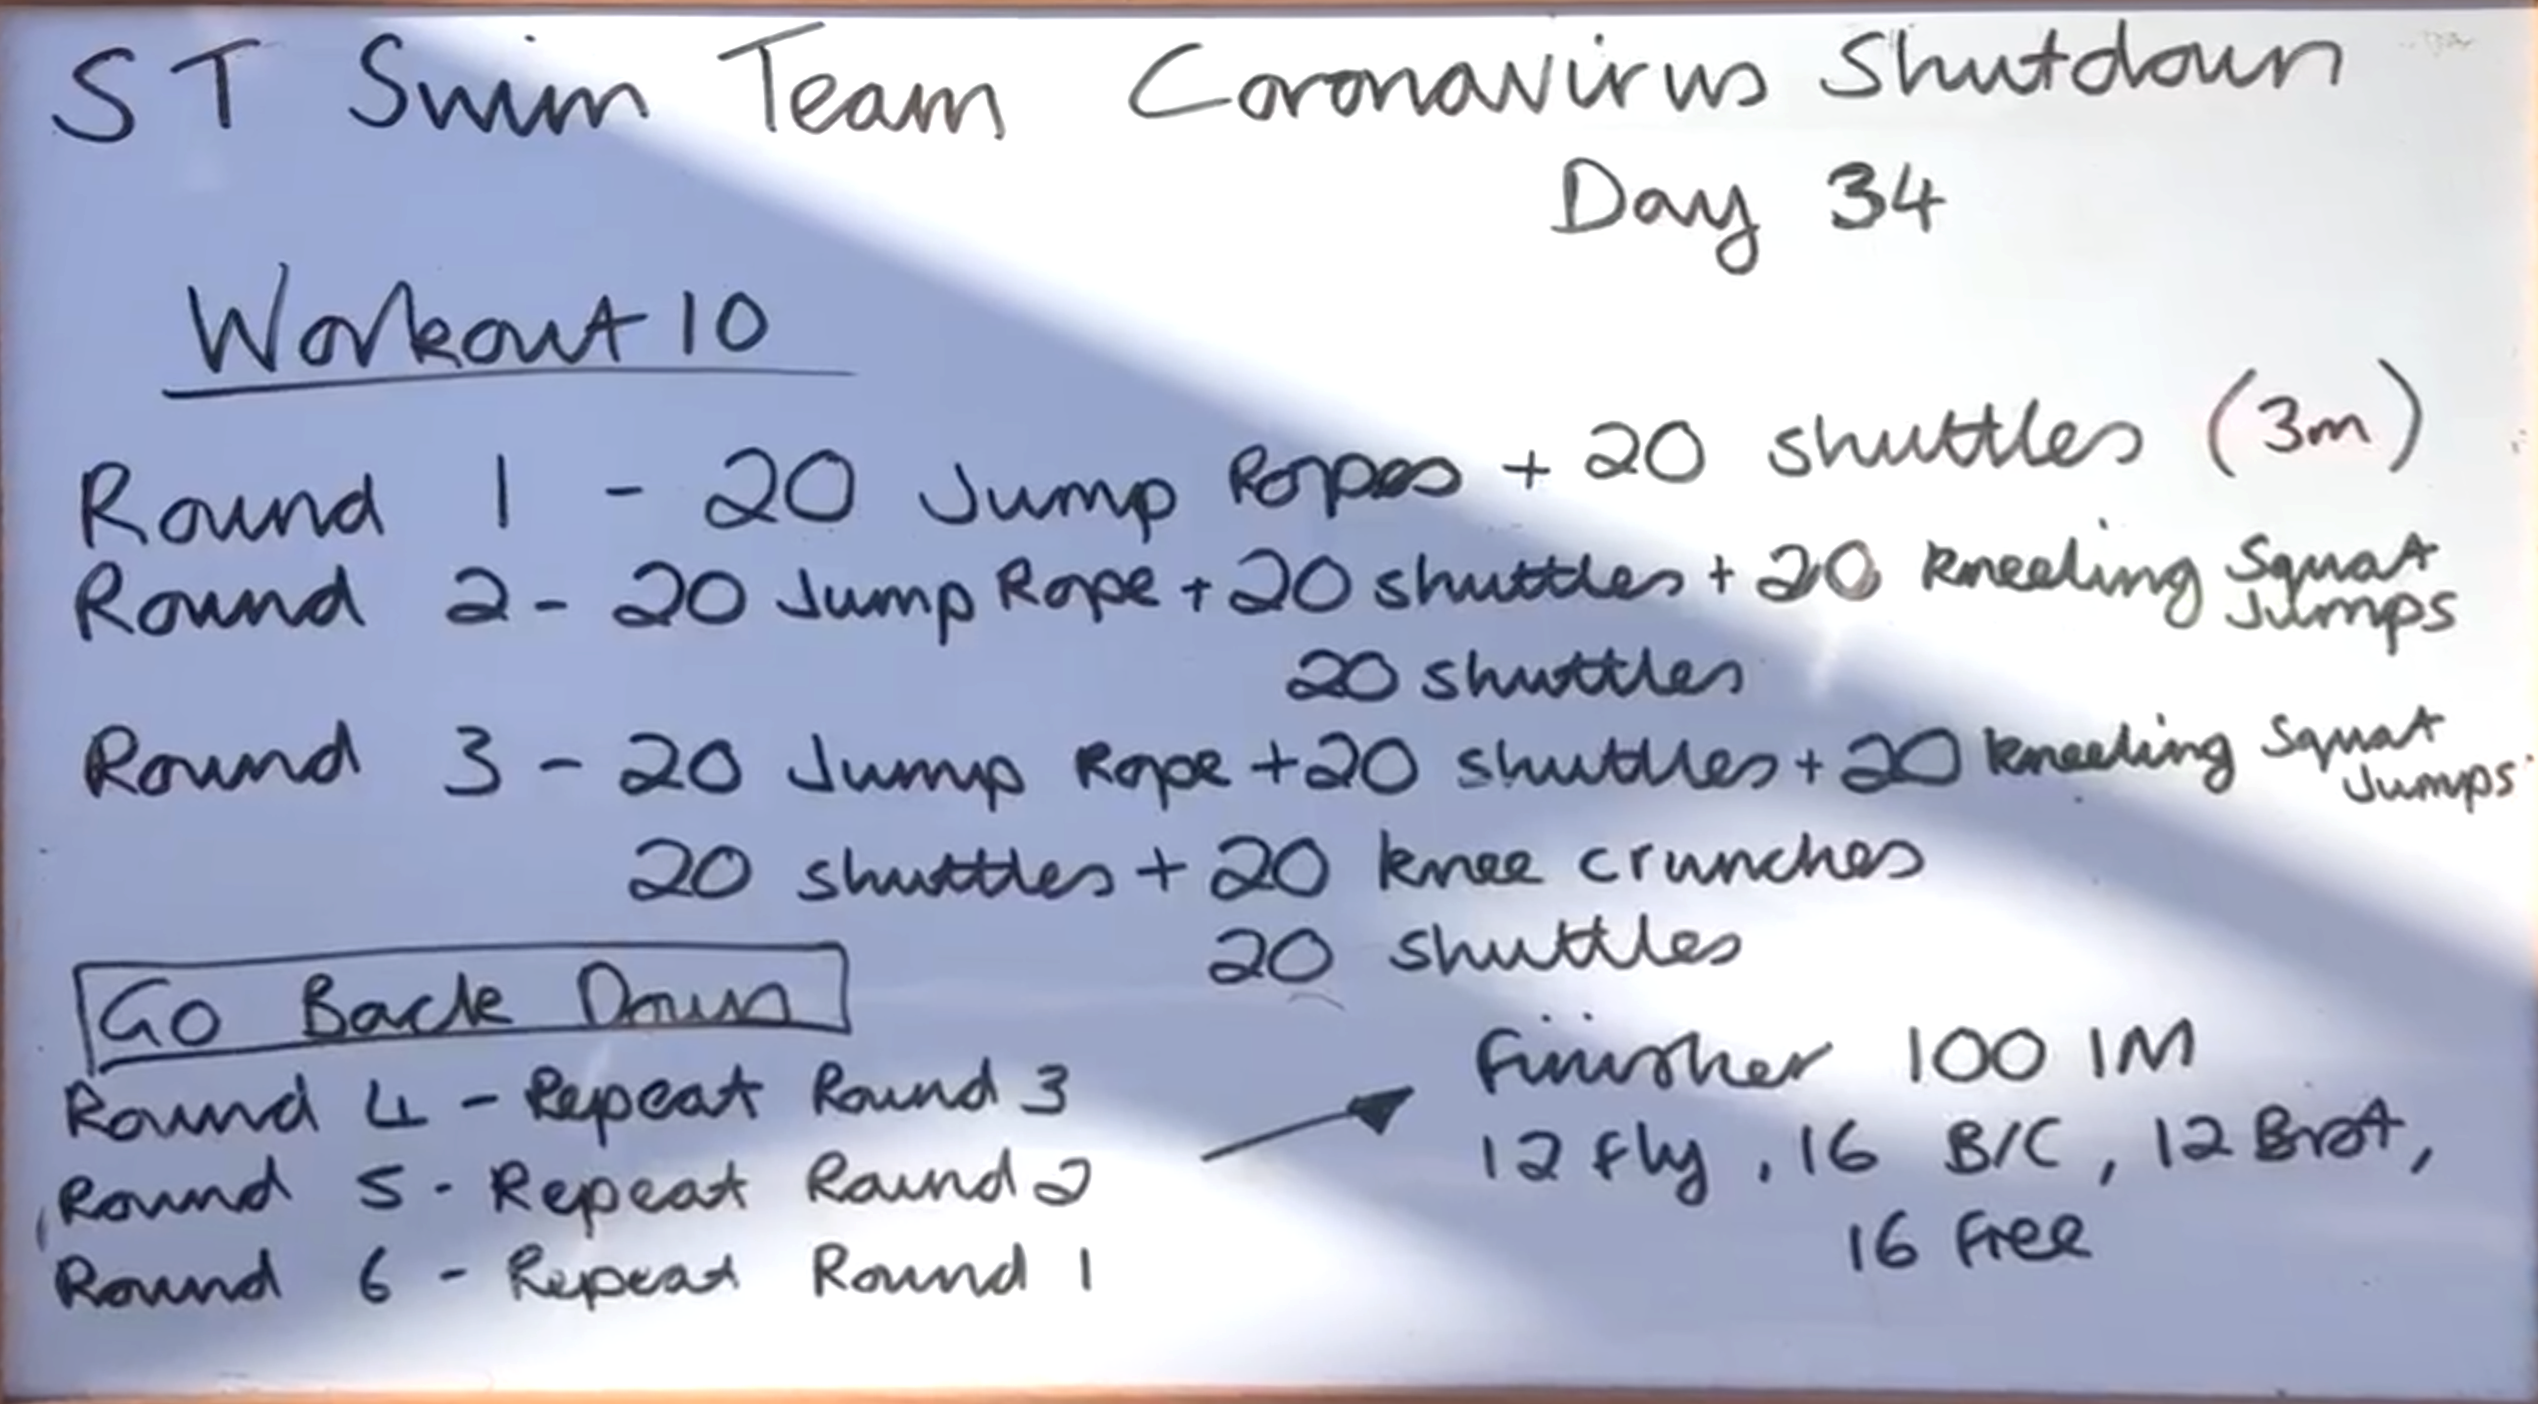 STSC Team Workout 10